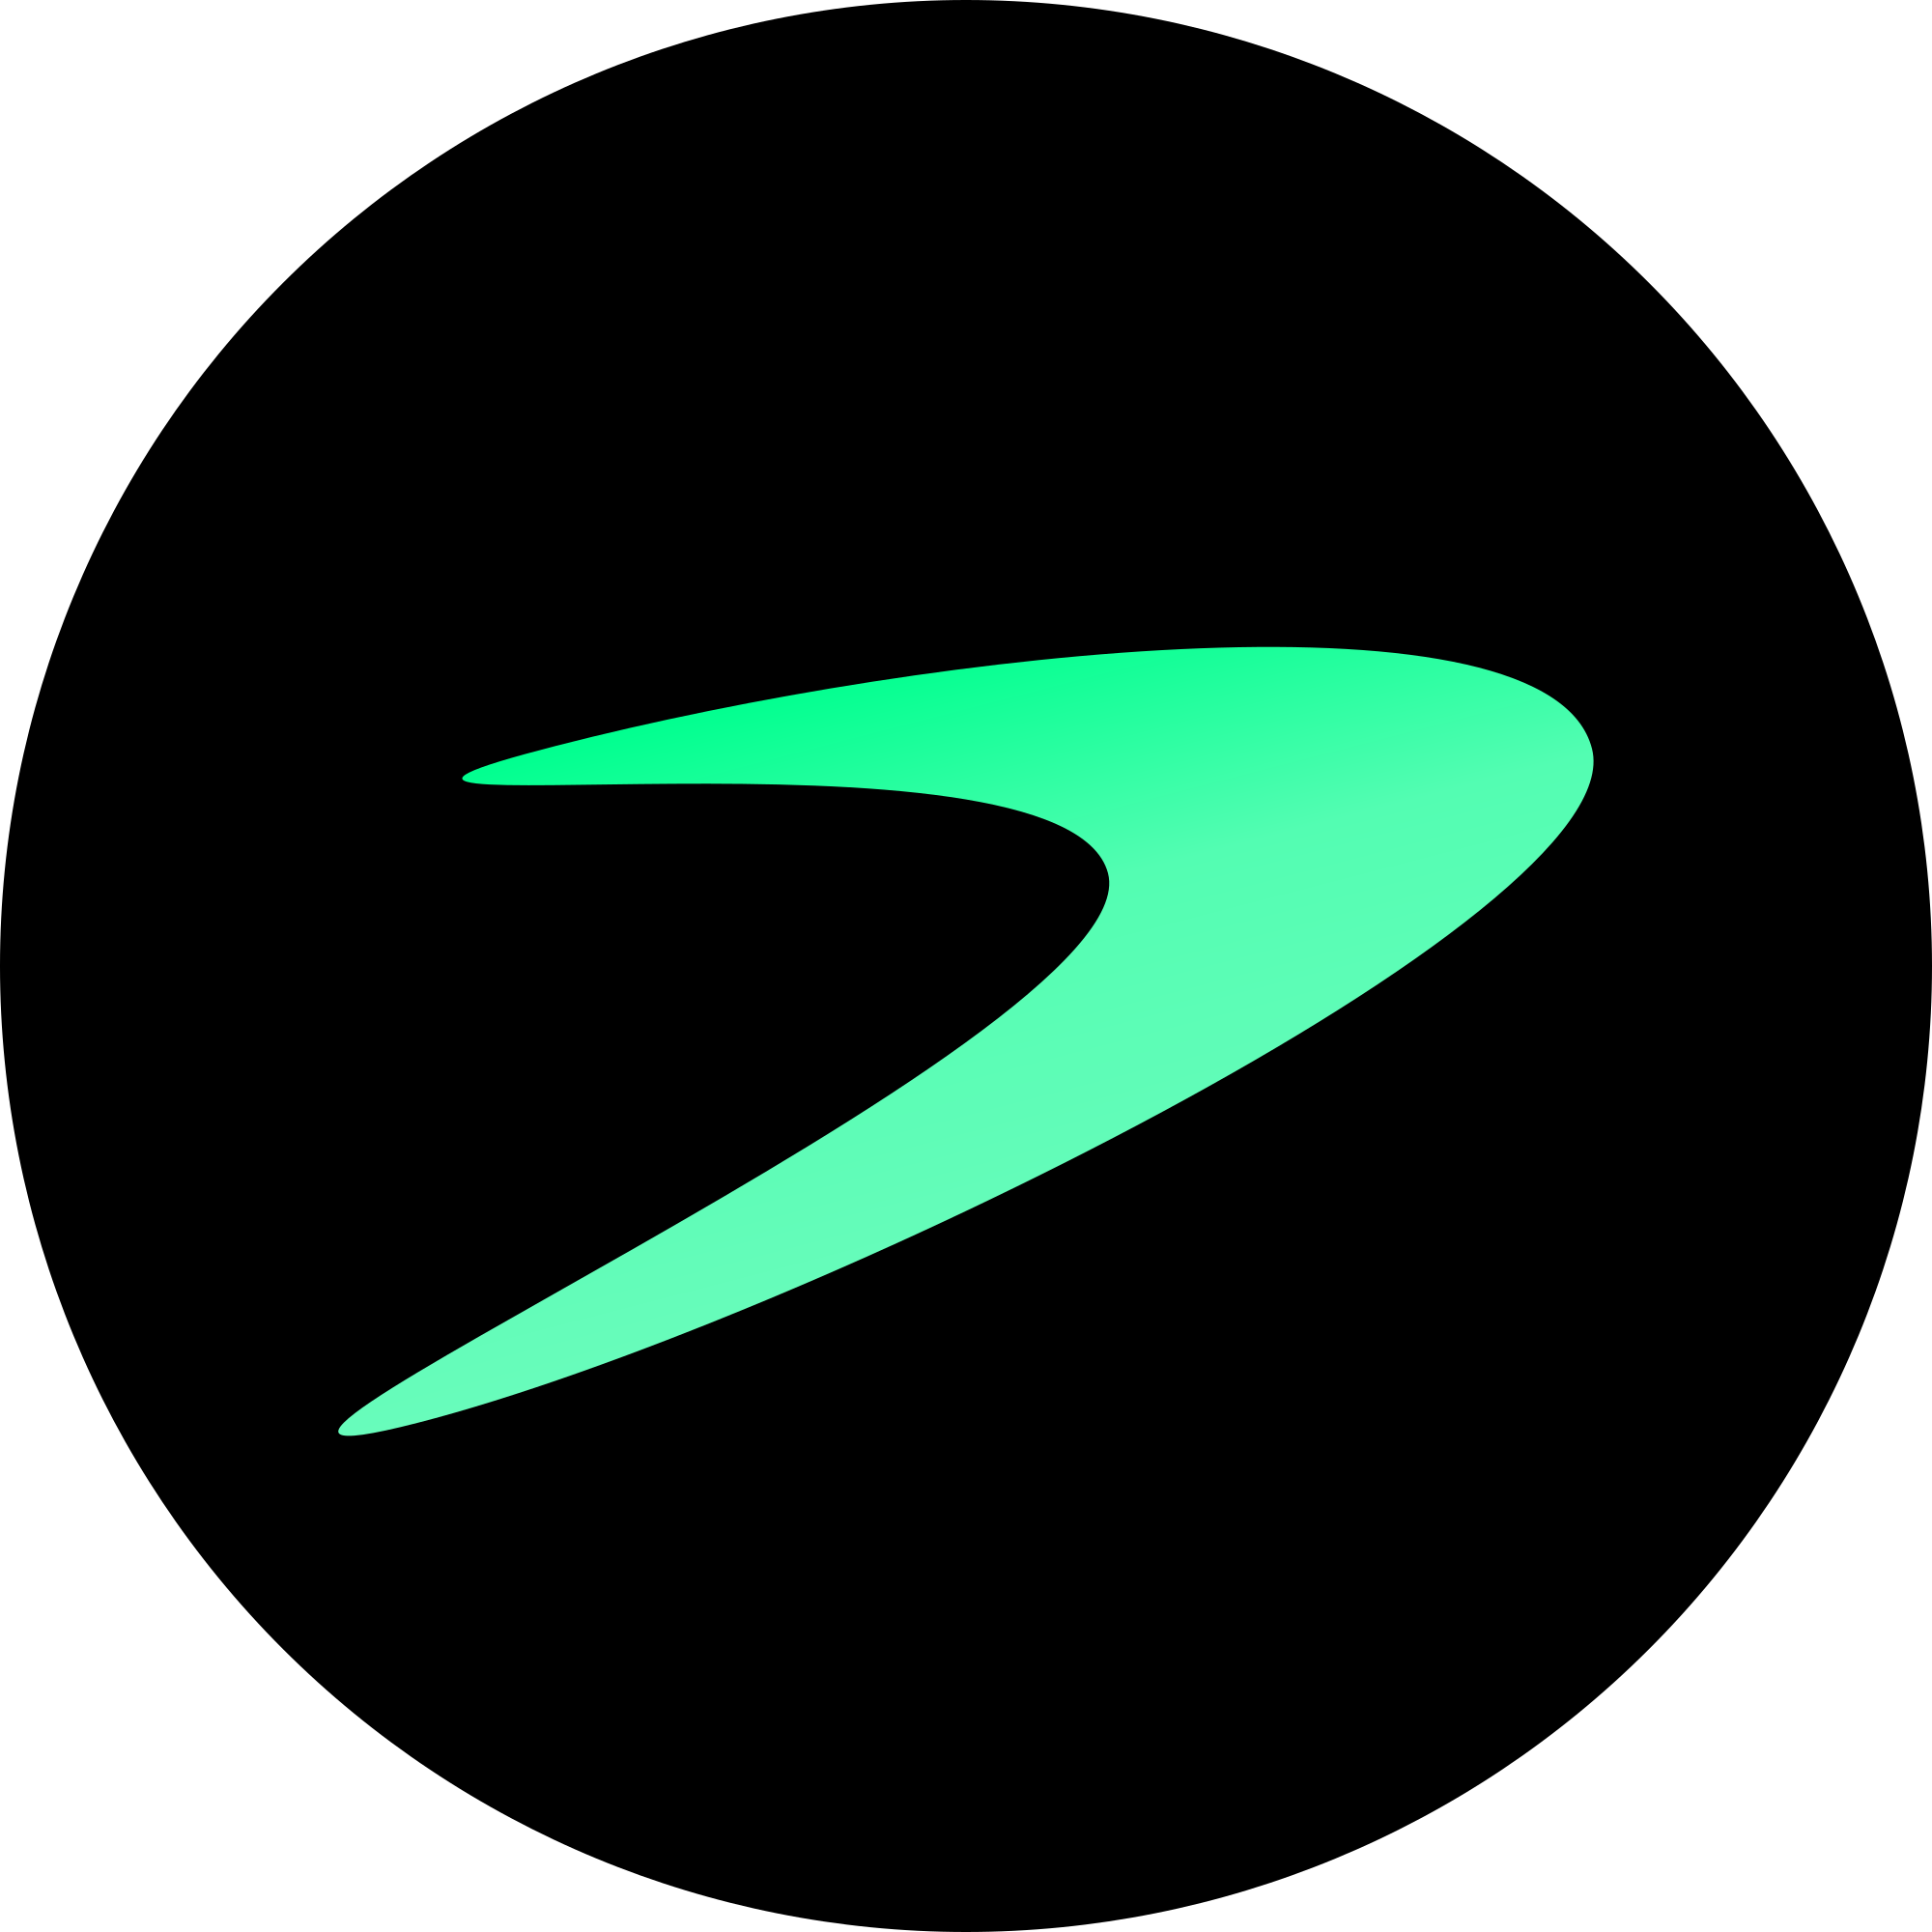 An image of the Tellor logo.